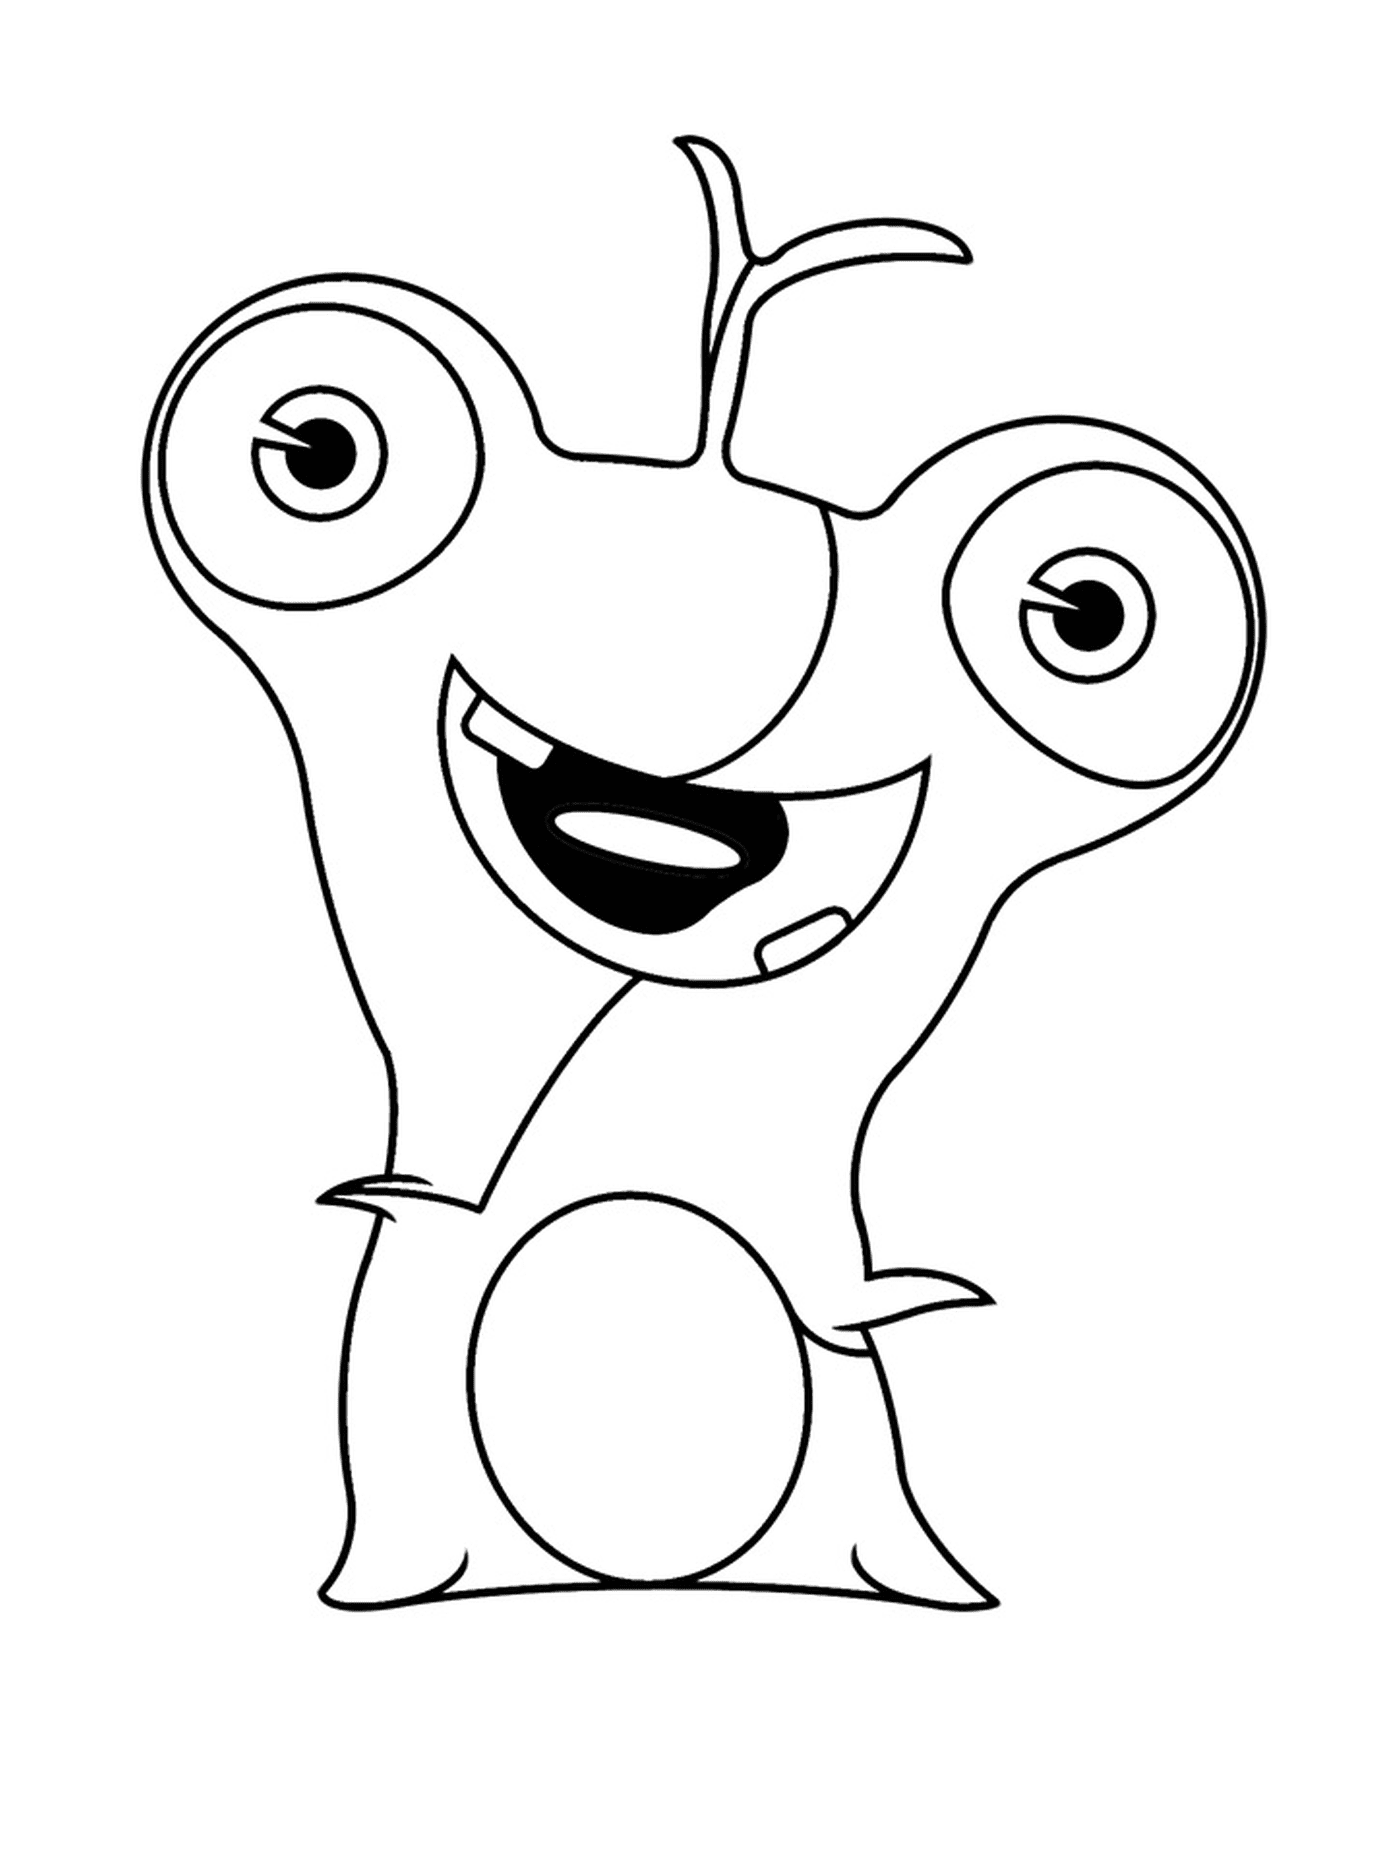  Polero, cartoon character 